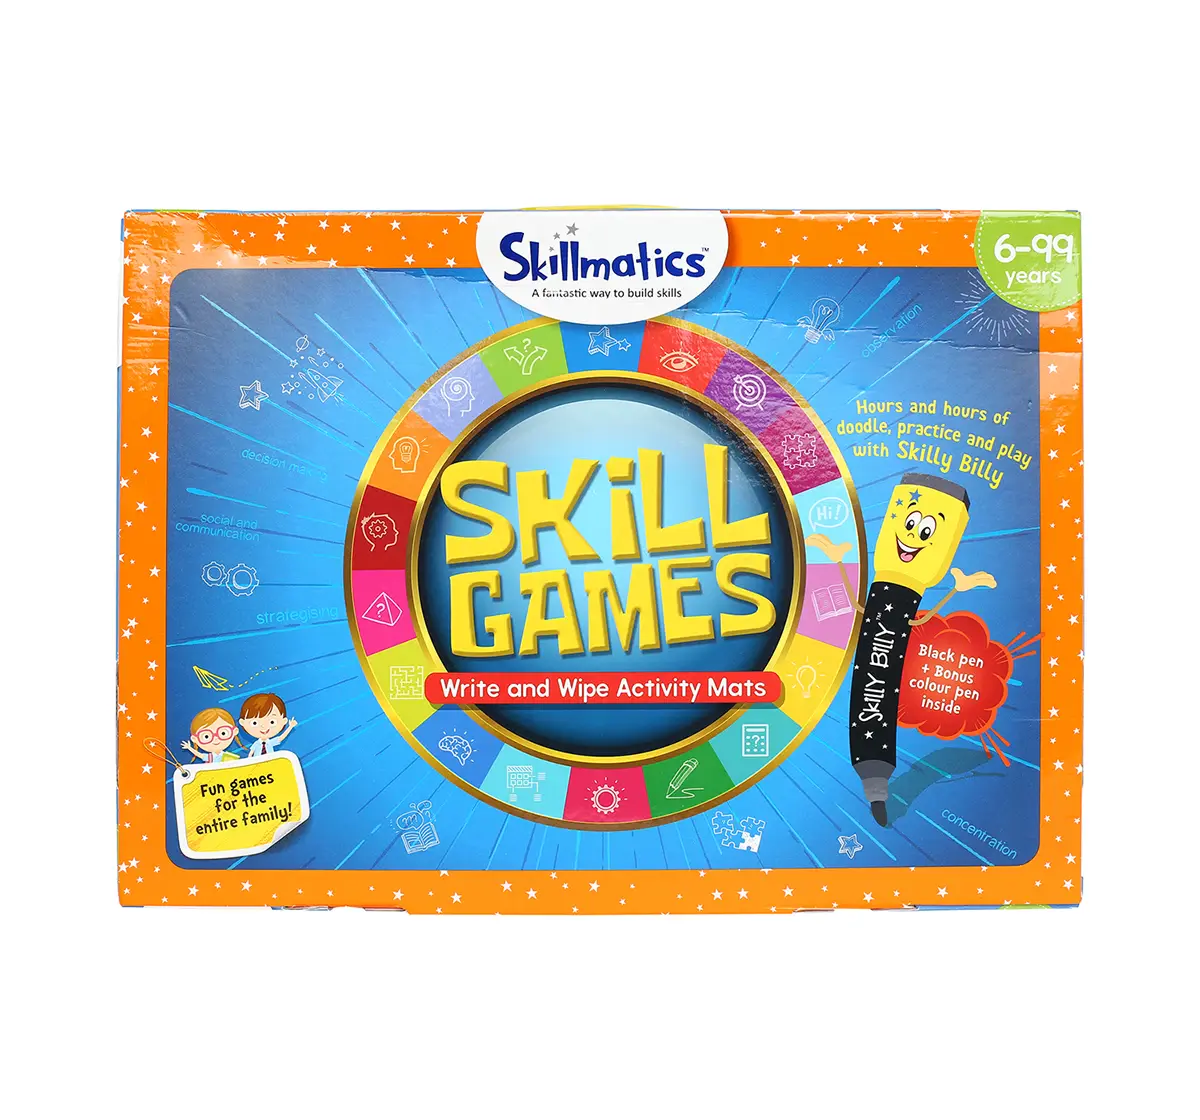 shop-skillmatics-educational-game-skill-games-6-99-years-fun